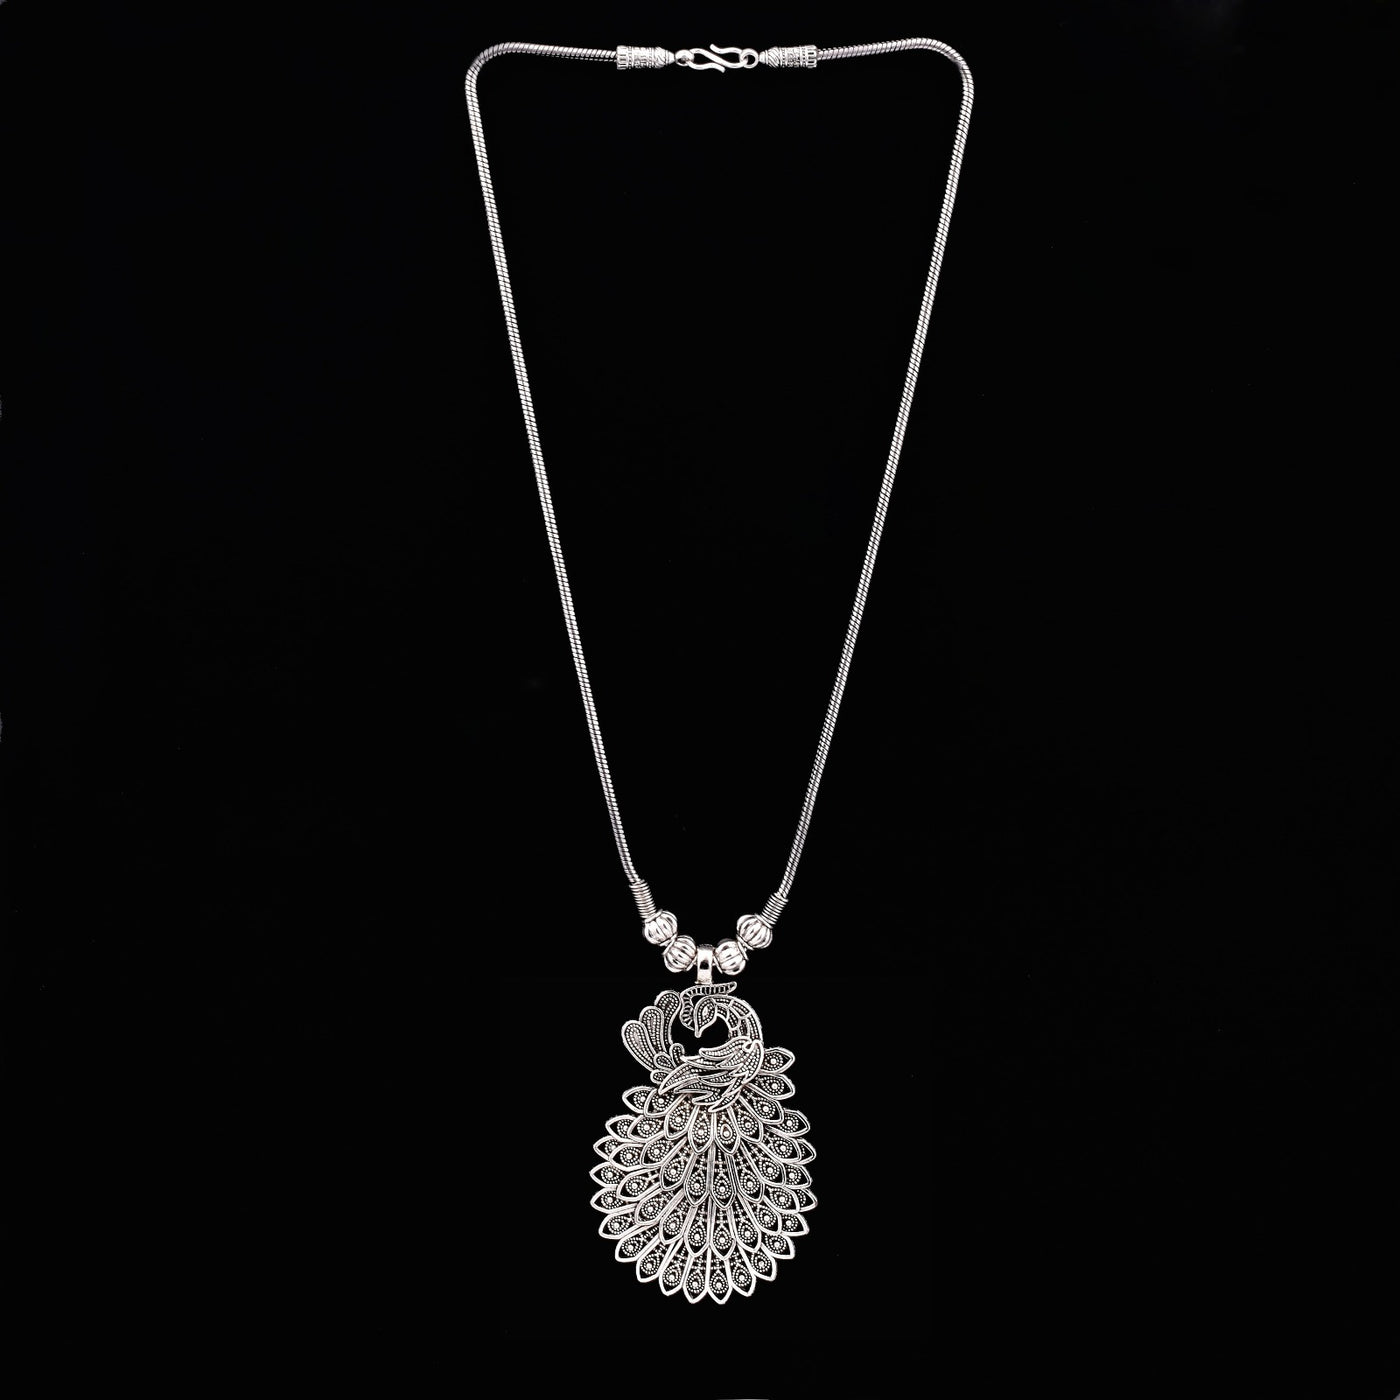 Oxidized Silver Peacock Pendant Necklace